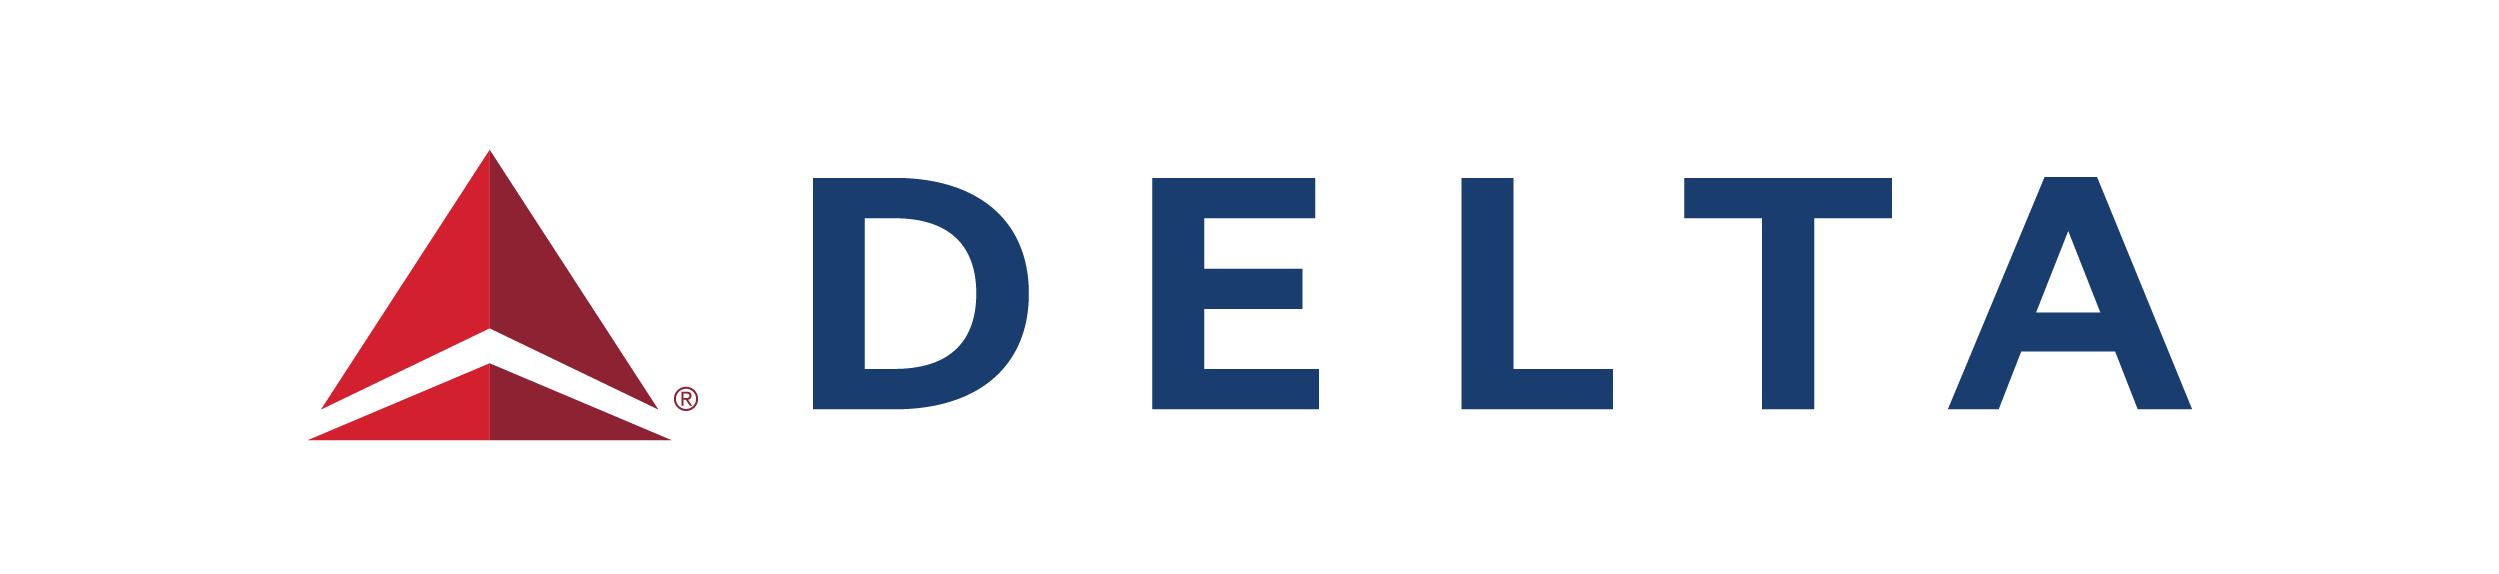 im Delta logo variations-01.png